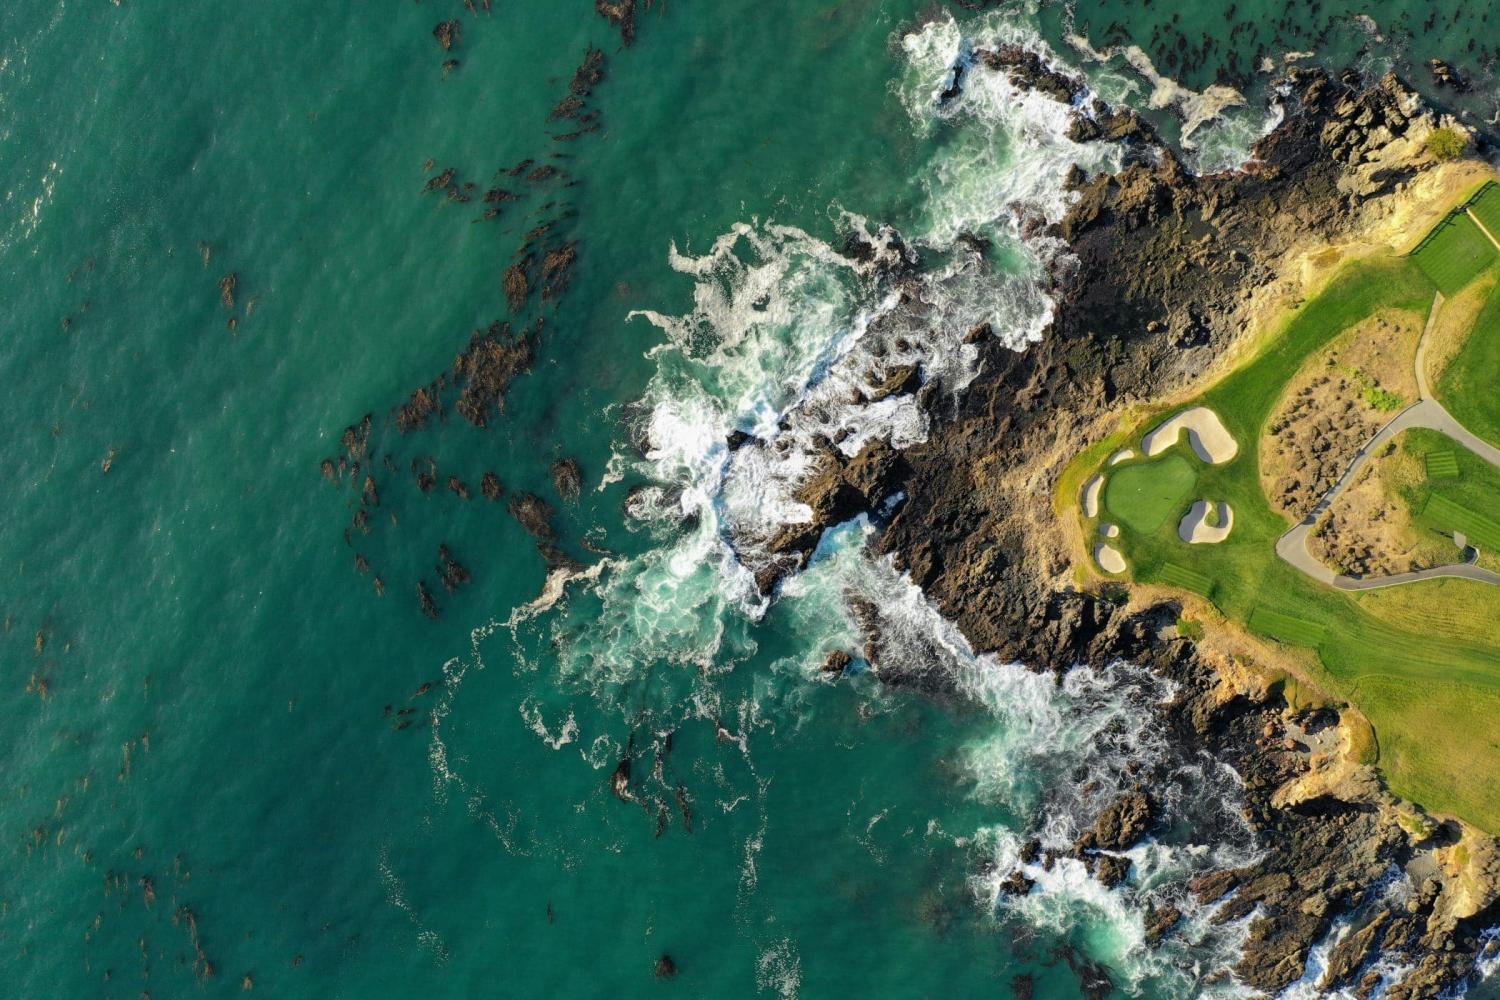 best golf courses in california